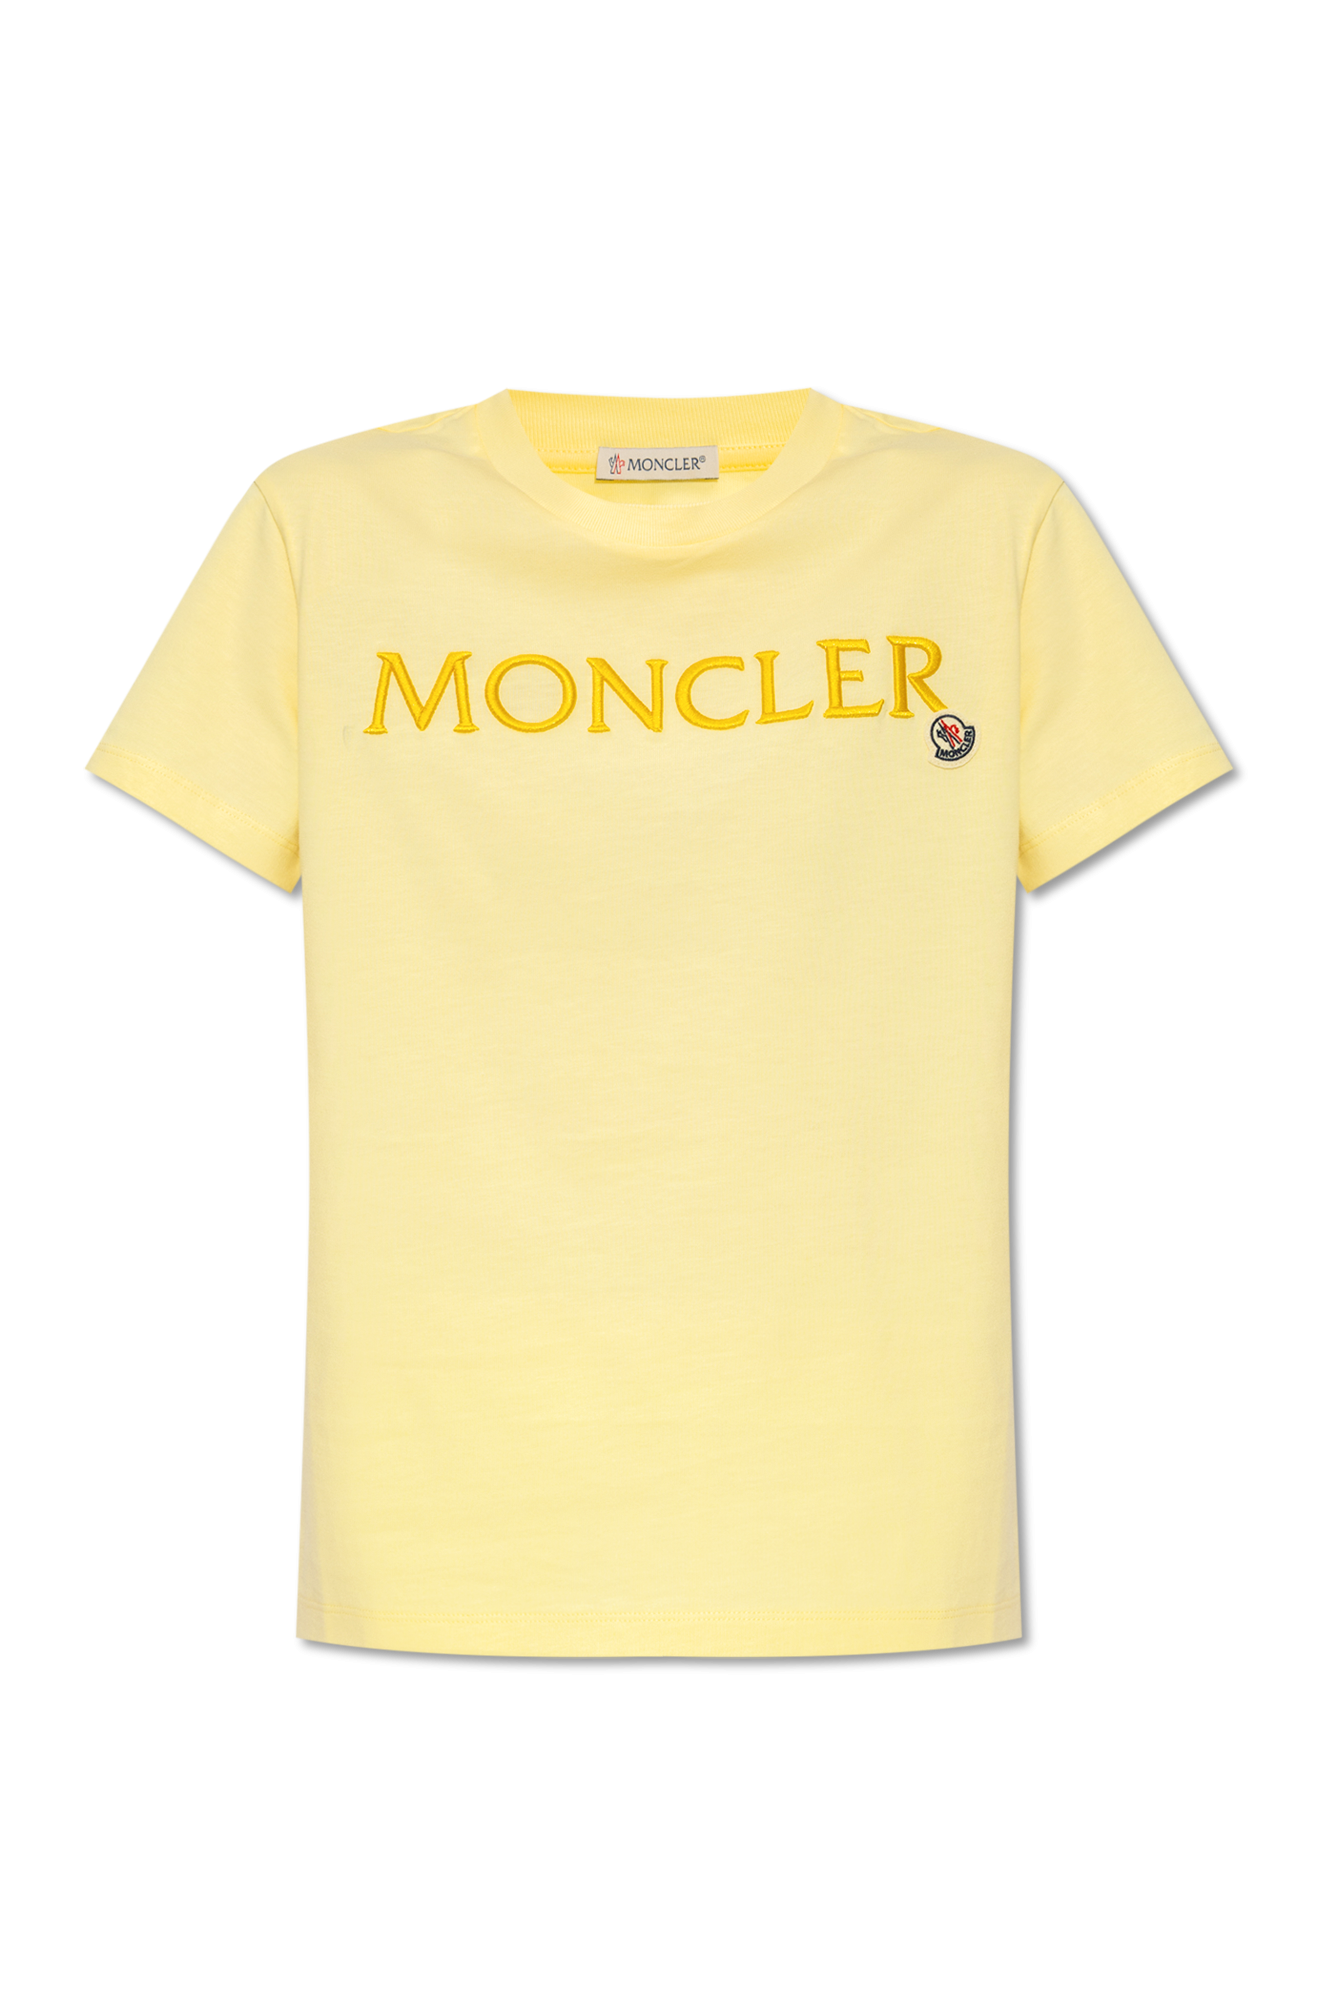 Moncler adidas x Fiorucci Womens T Essential shirt Multicolor Womens Clothing